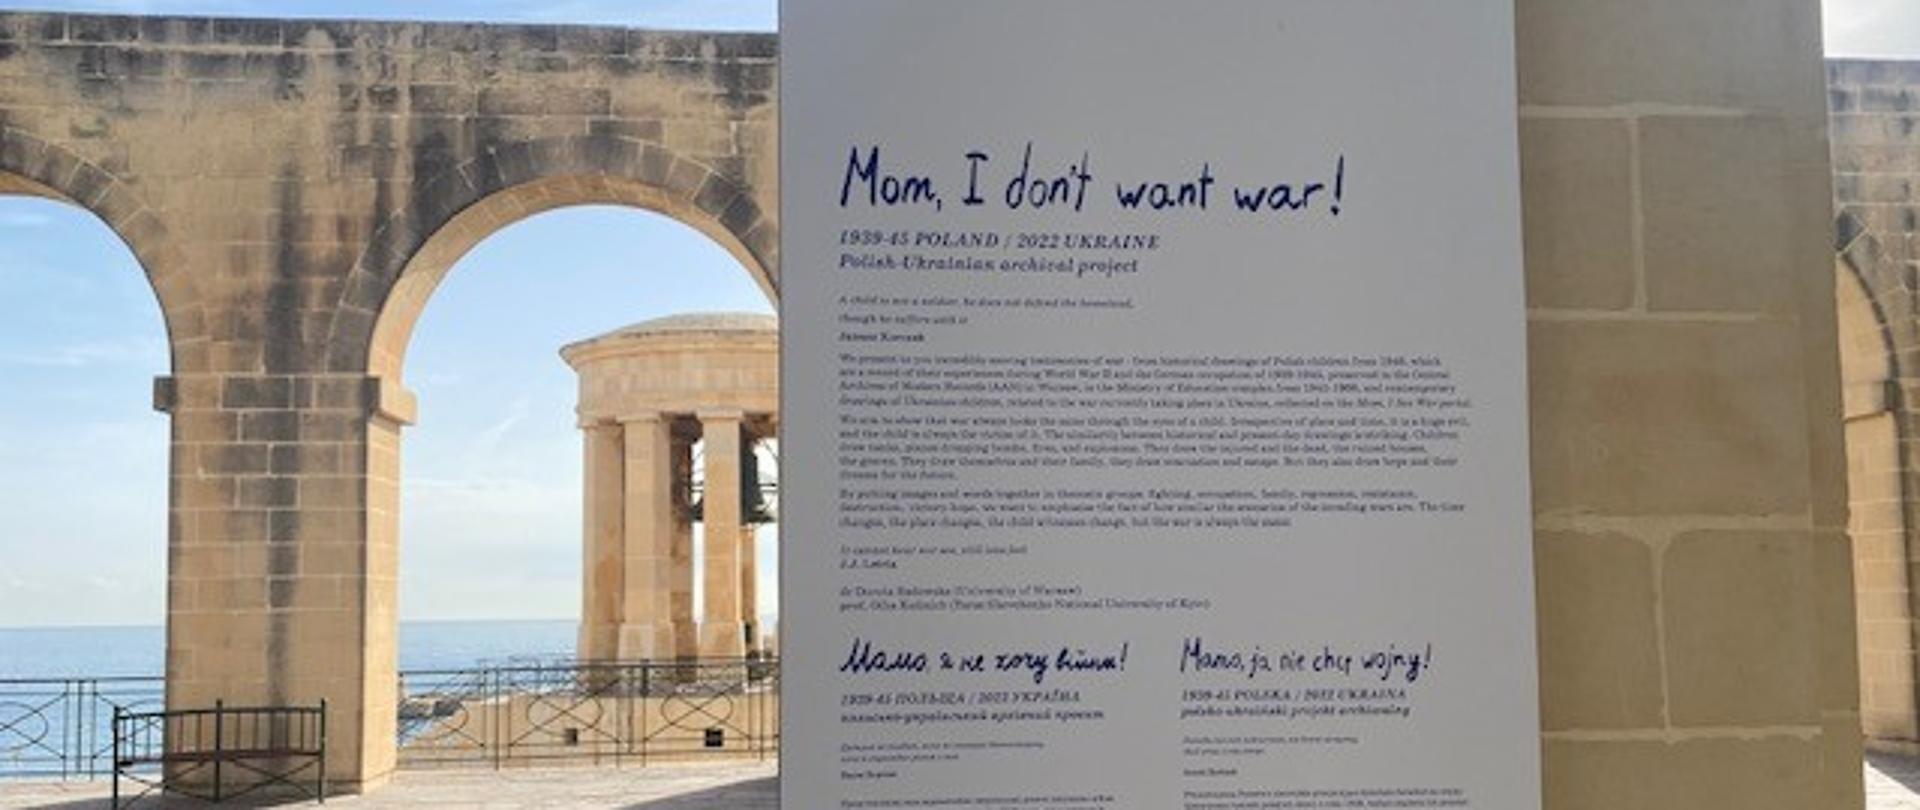 Wystawa "Mom, I don't want war"